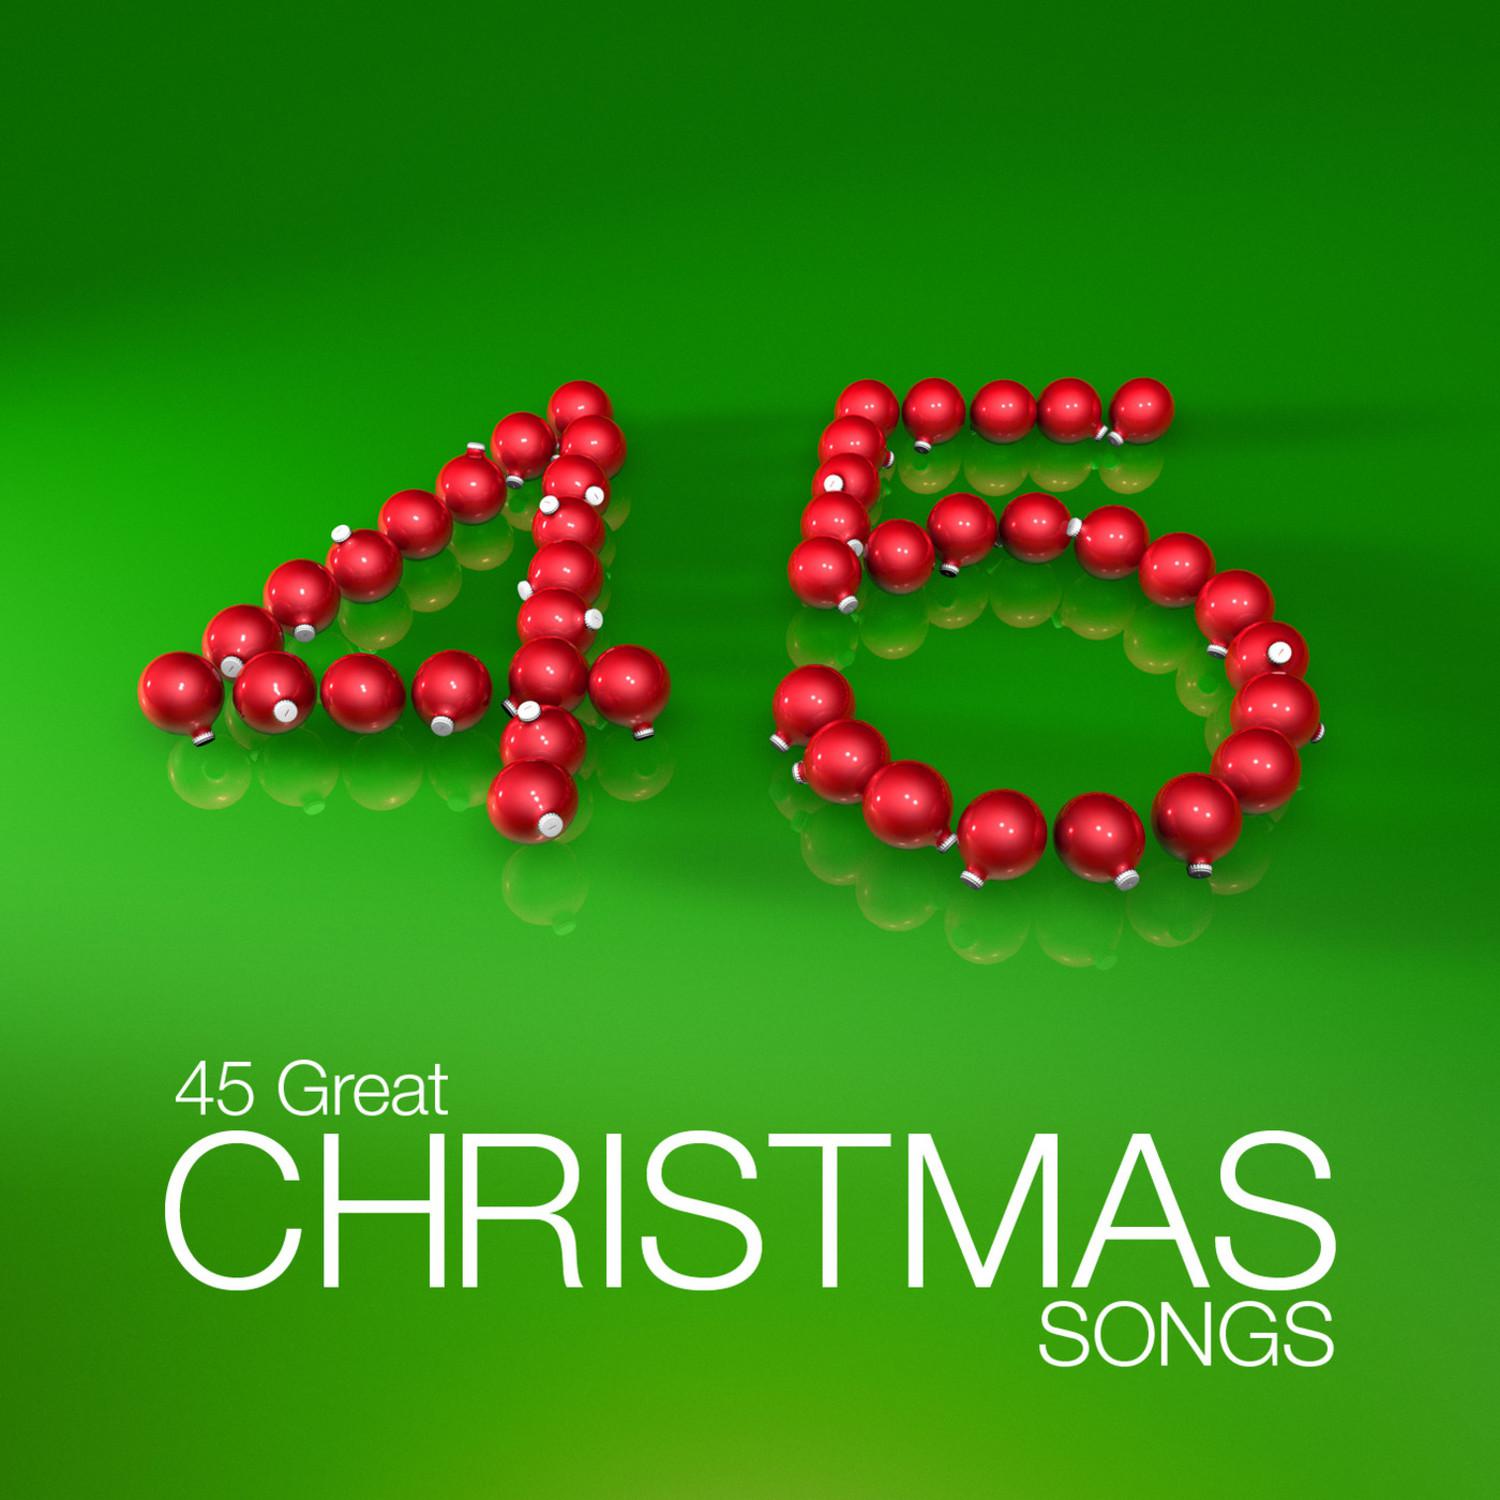 45 Great Christmas Songs